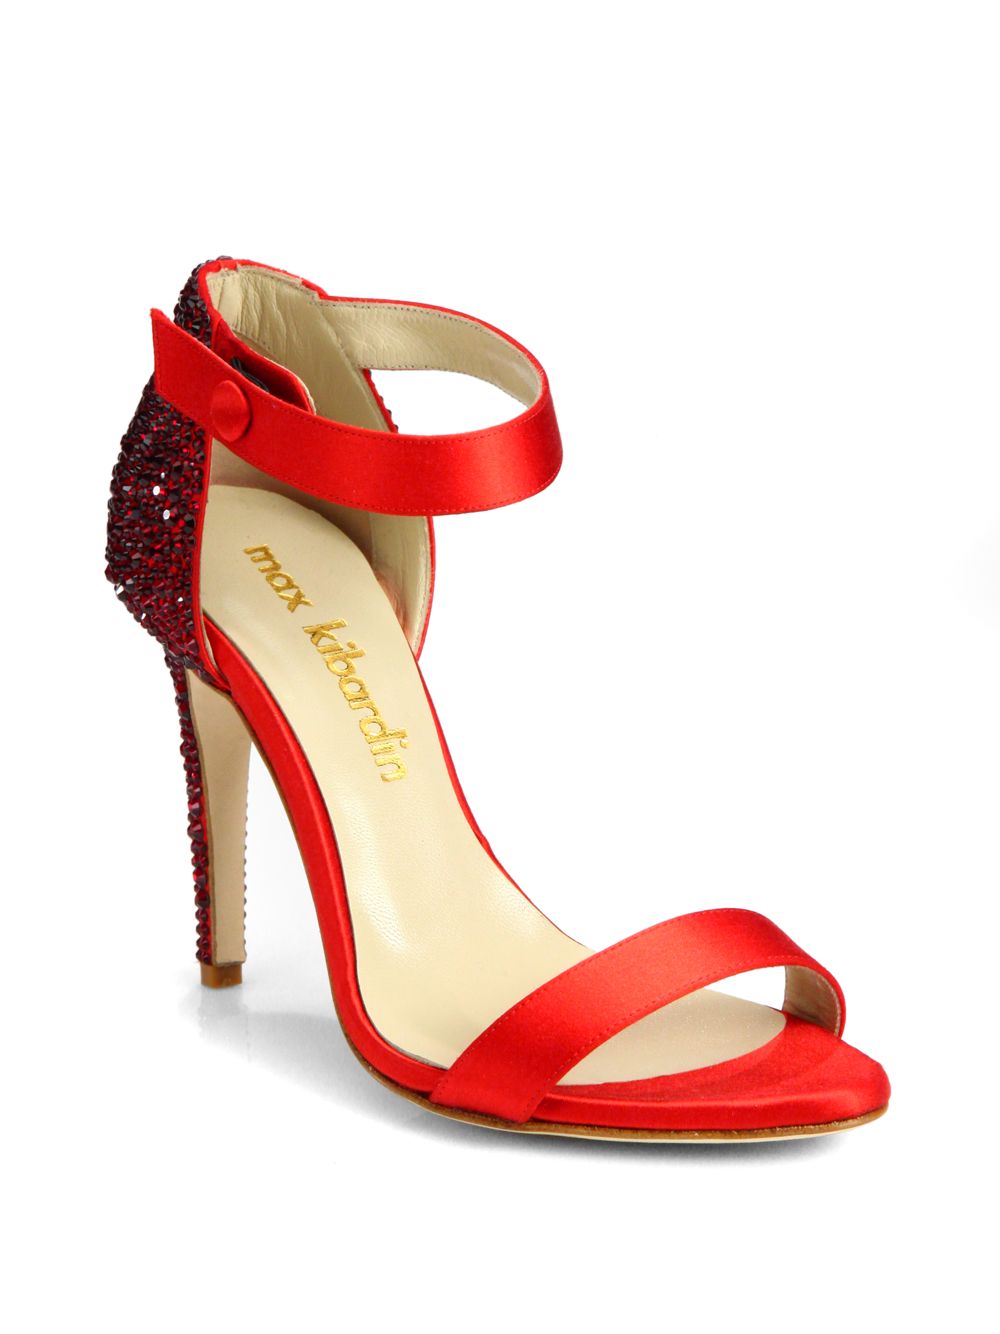 Max Kibardin Satin And Crystal Coated Heel Sandals In Red